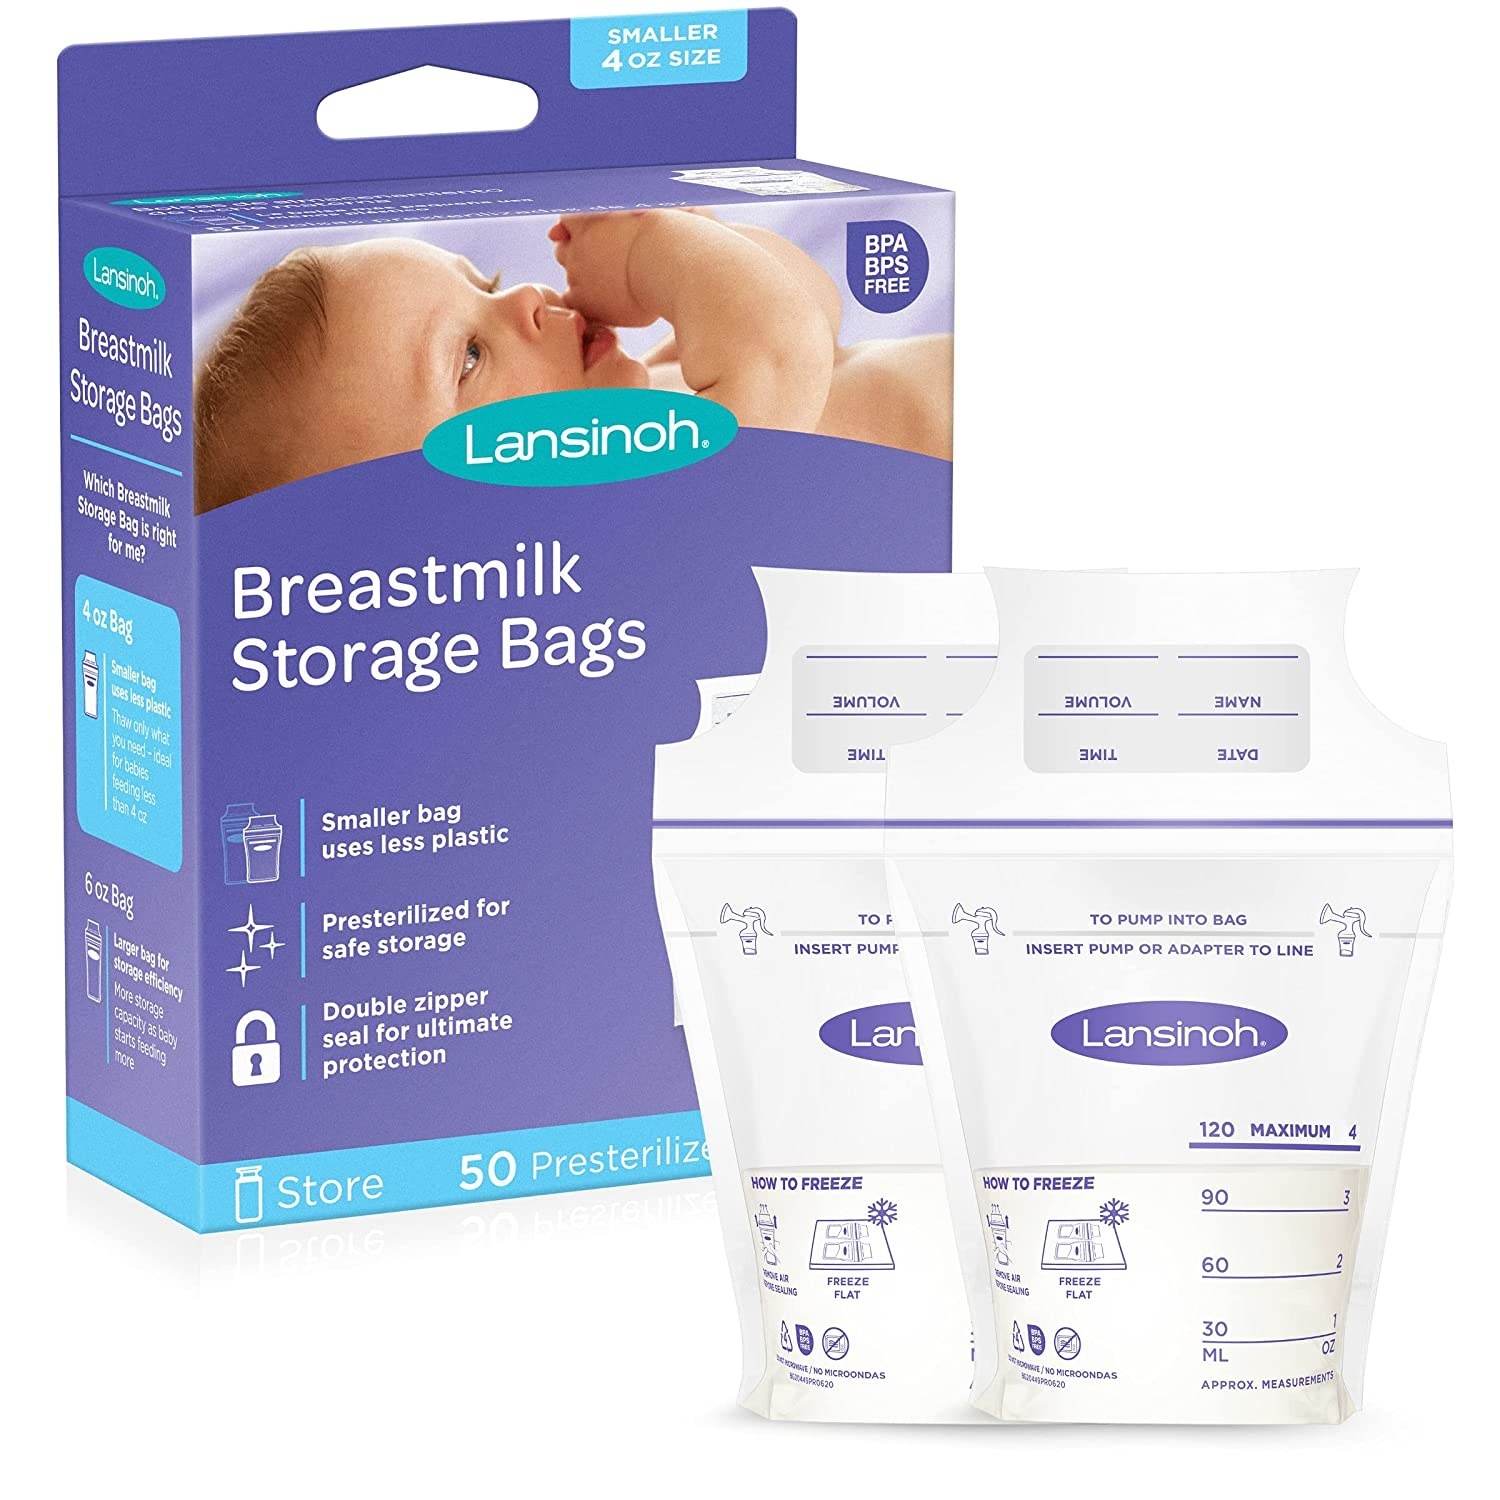 the breast milk storage bags